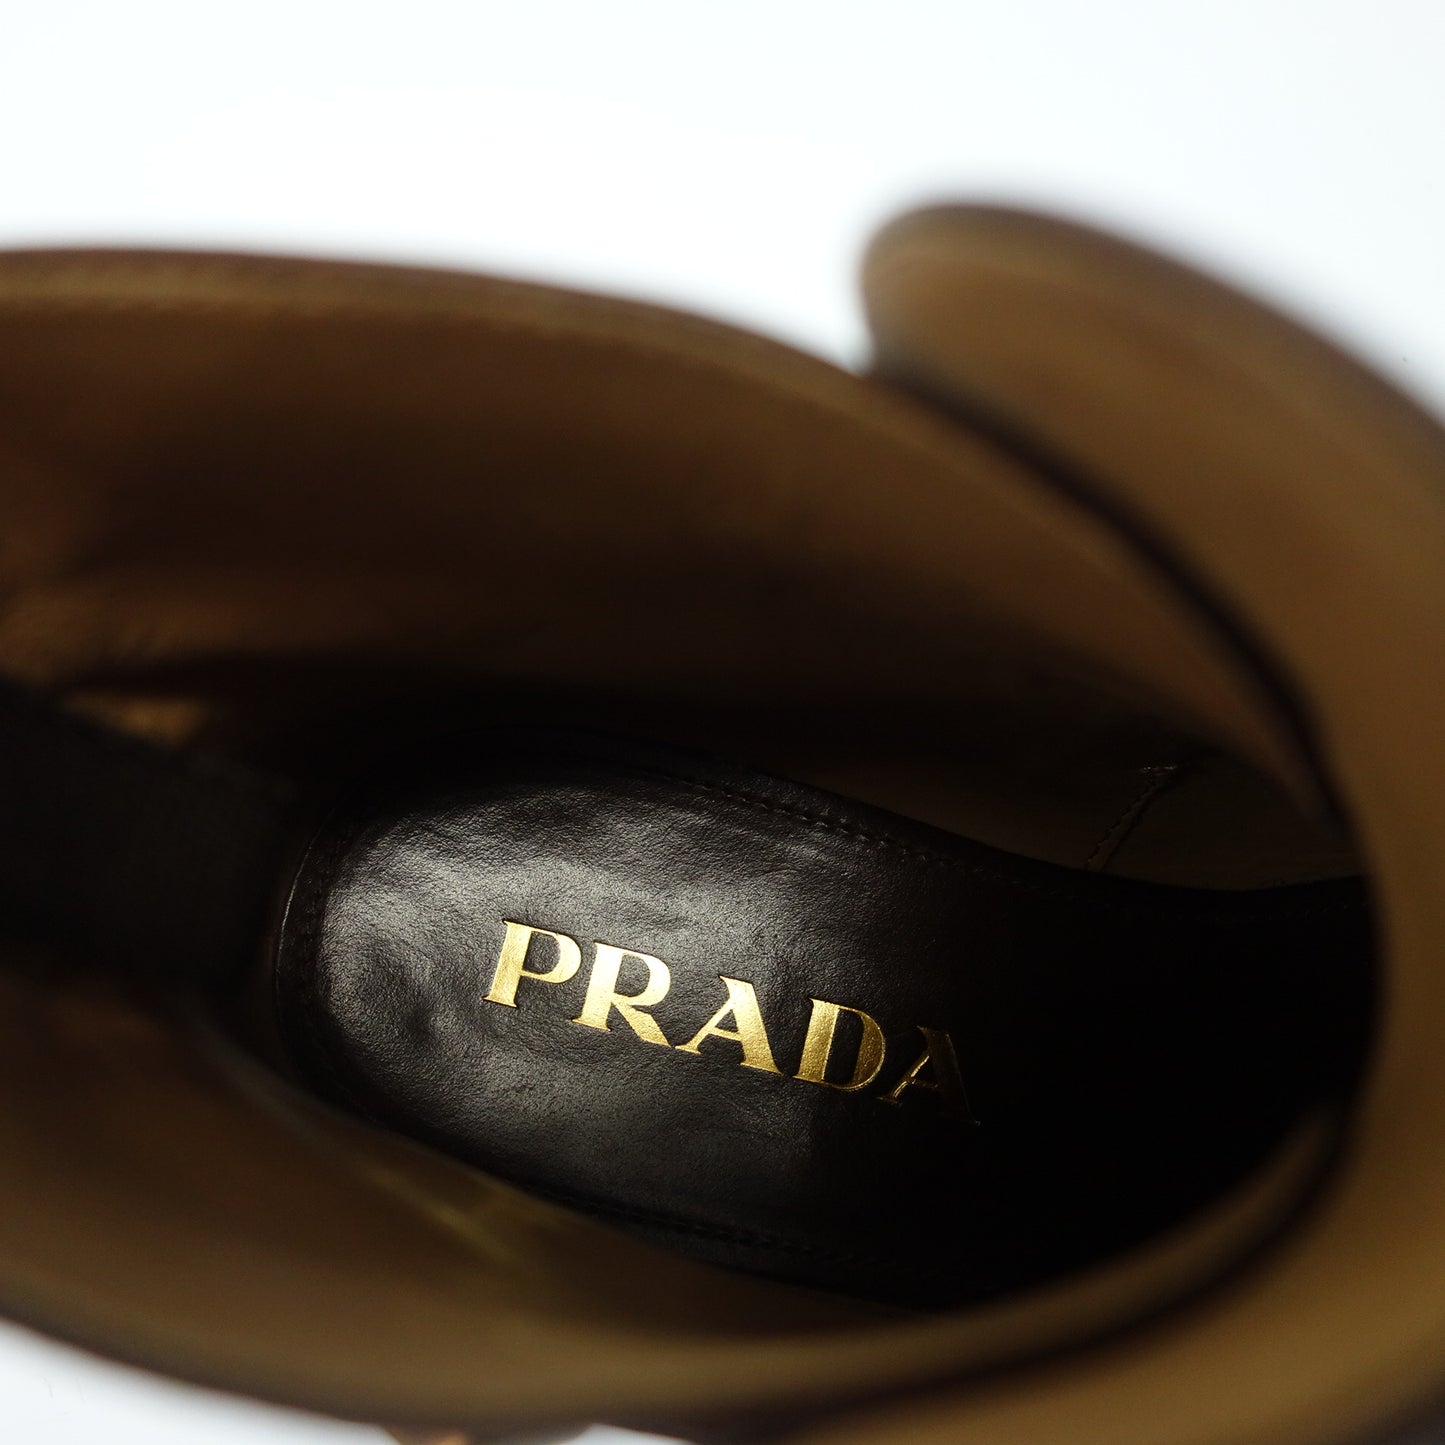 Used ◆Prada leather boots jodhpur boots ladies 36.5 brown PRADA [AFD4] 